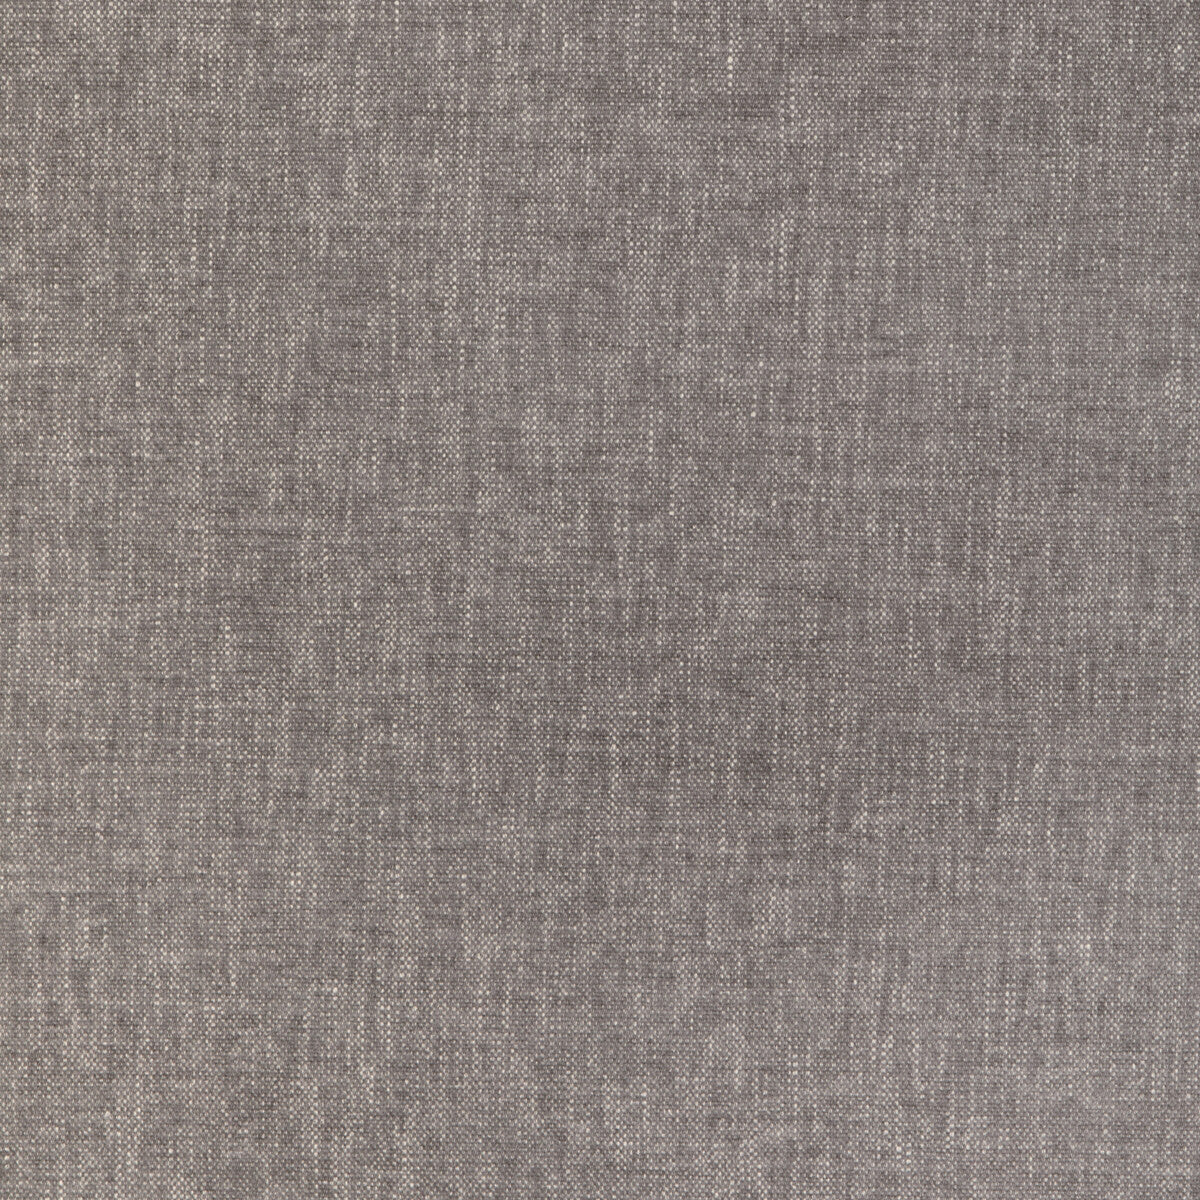 Kravet Smart fabric in 36663-11 color - pattern 36663.11.0 - by Kravet Smart in the Performance Kravetarmor collection